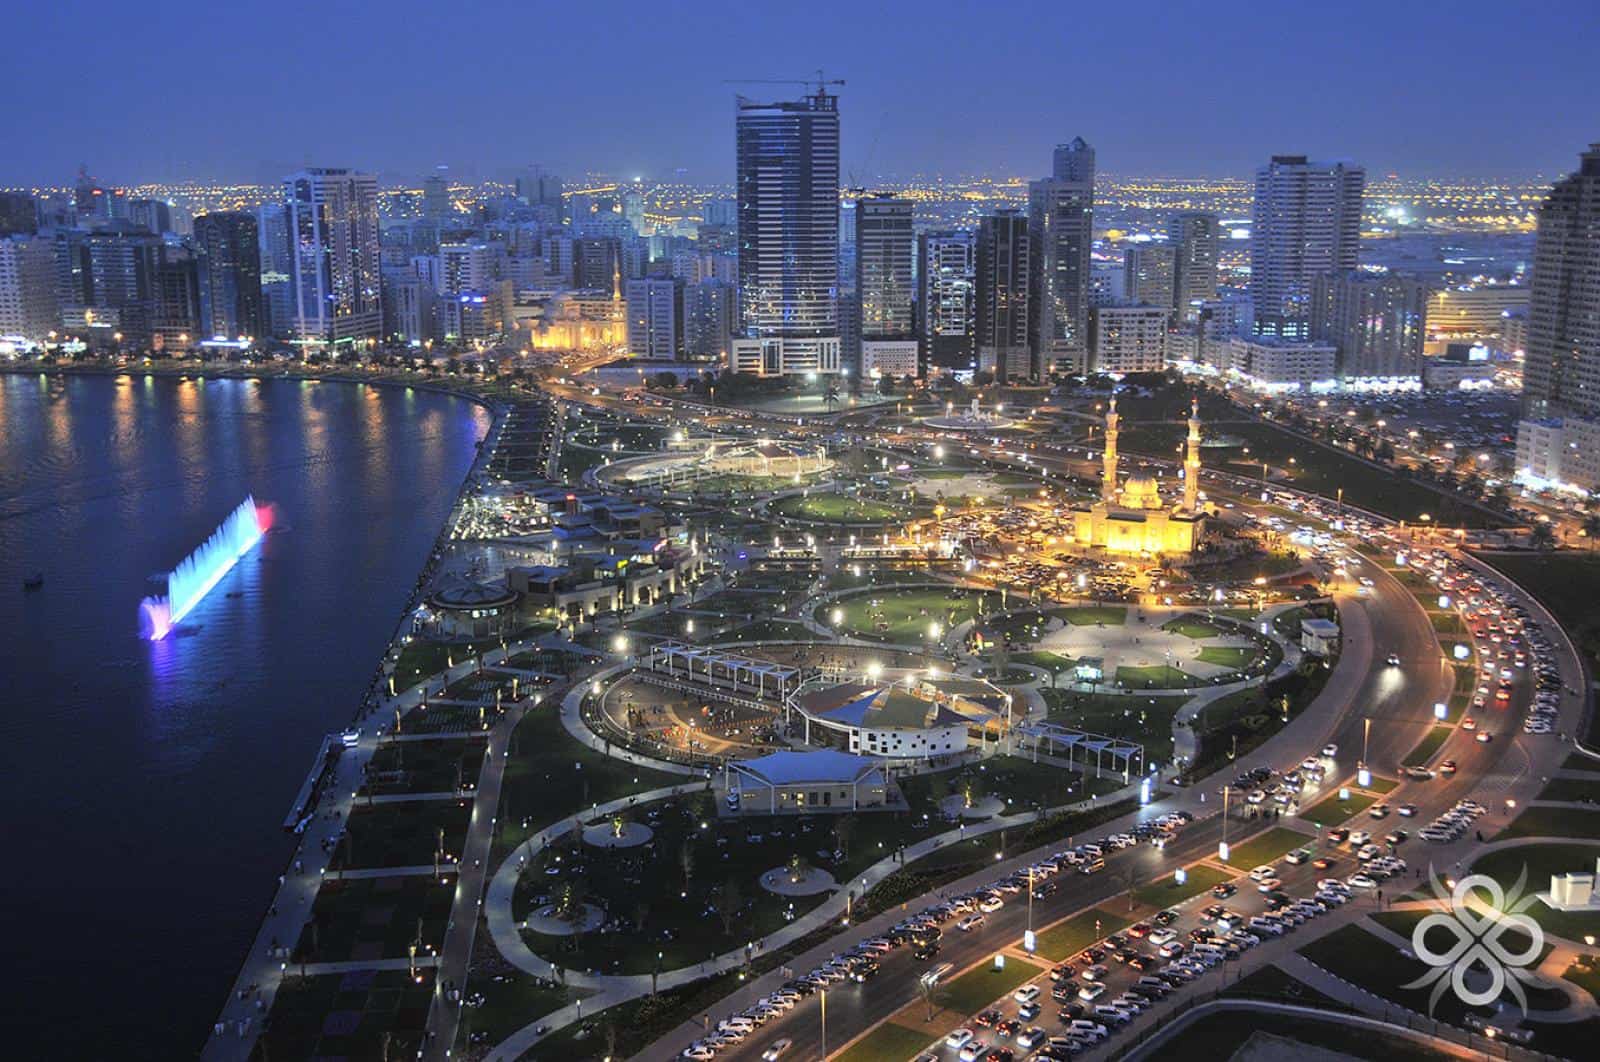 Al Majaz Waterfront Sharjah Waterfront developments and projects we love in Sharjah